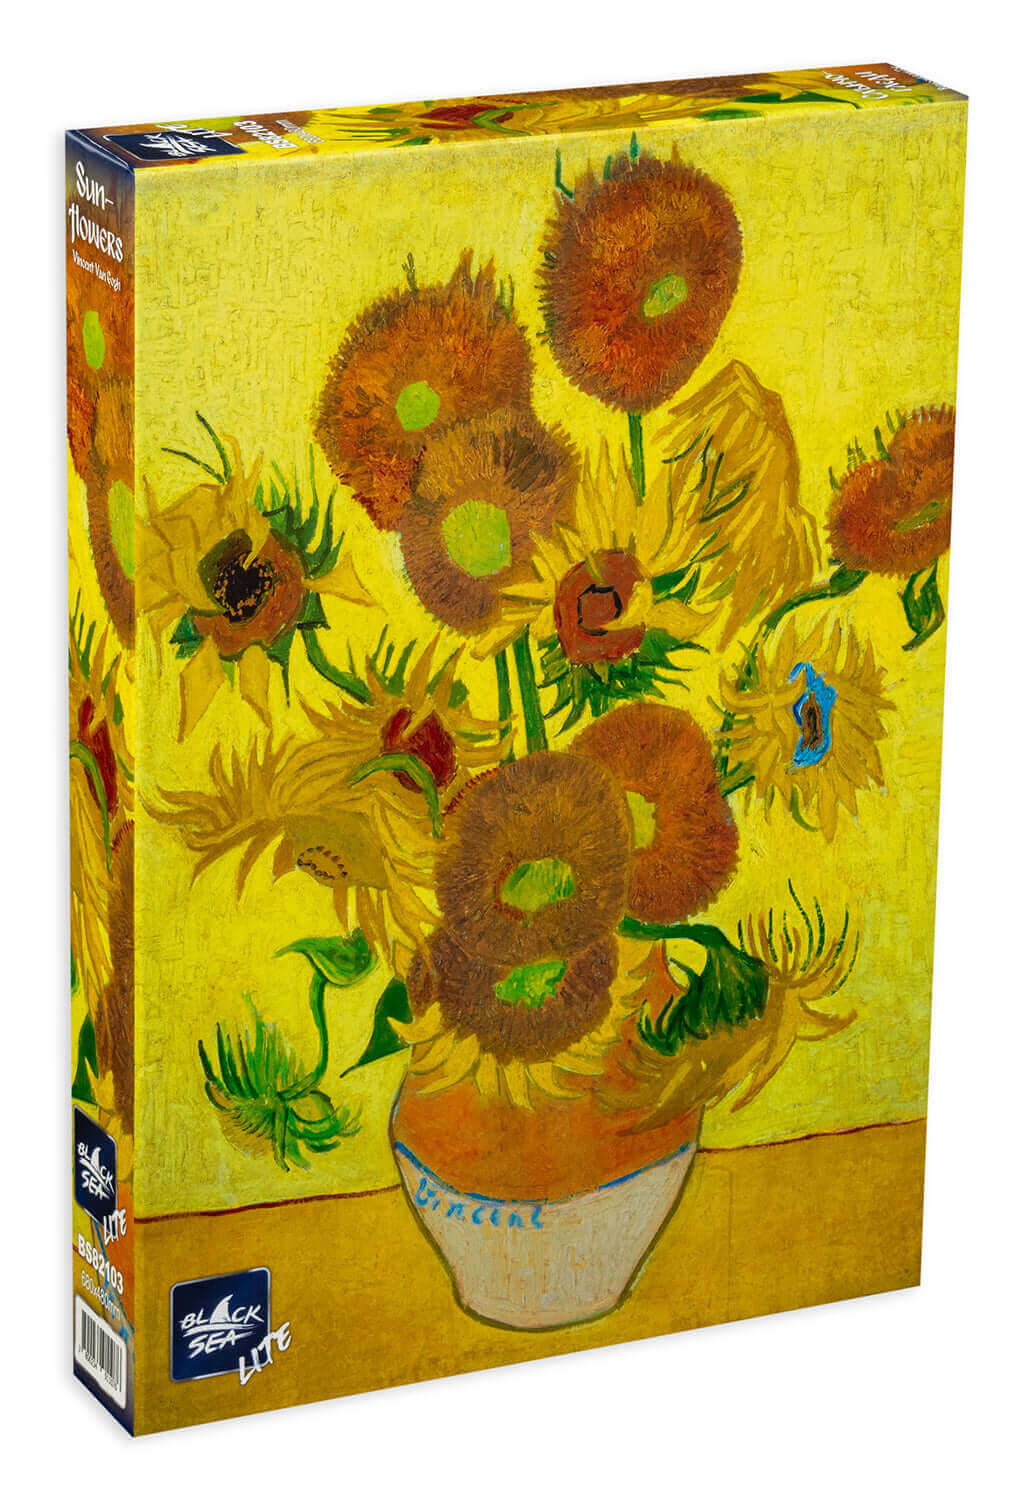 Puzzle Black Sea 1000 pieces - Sunflowers